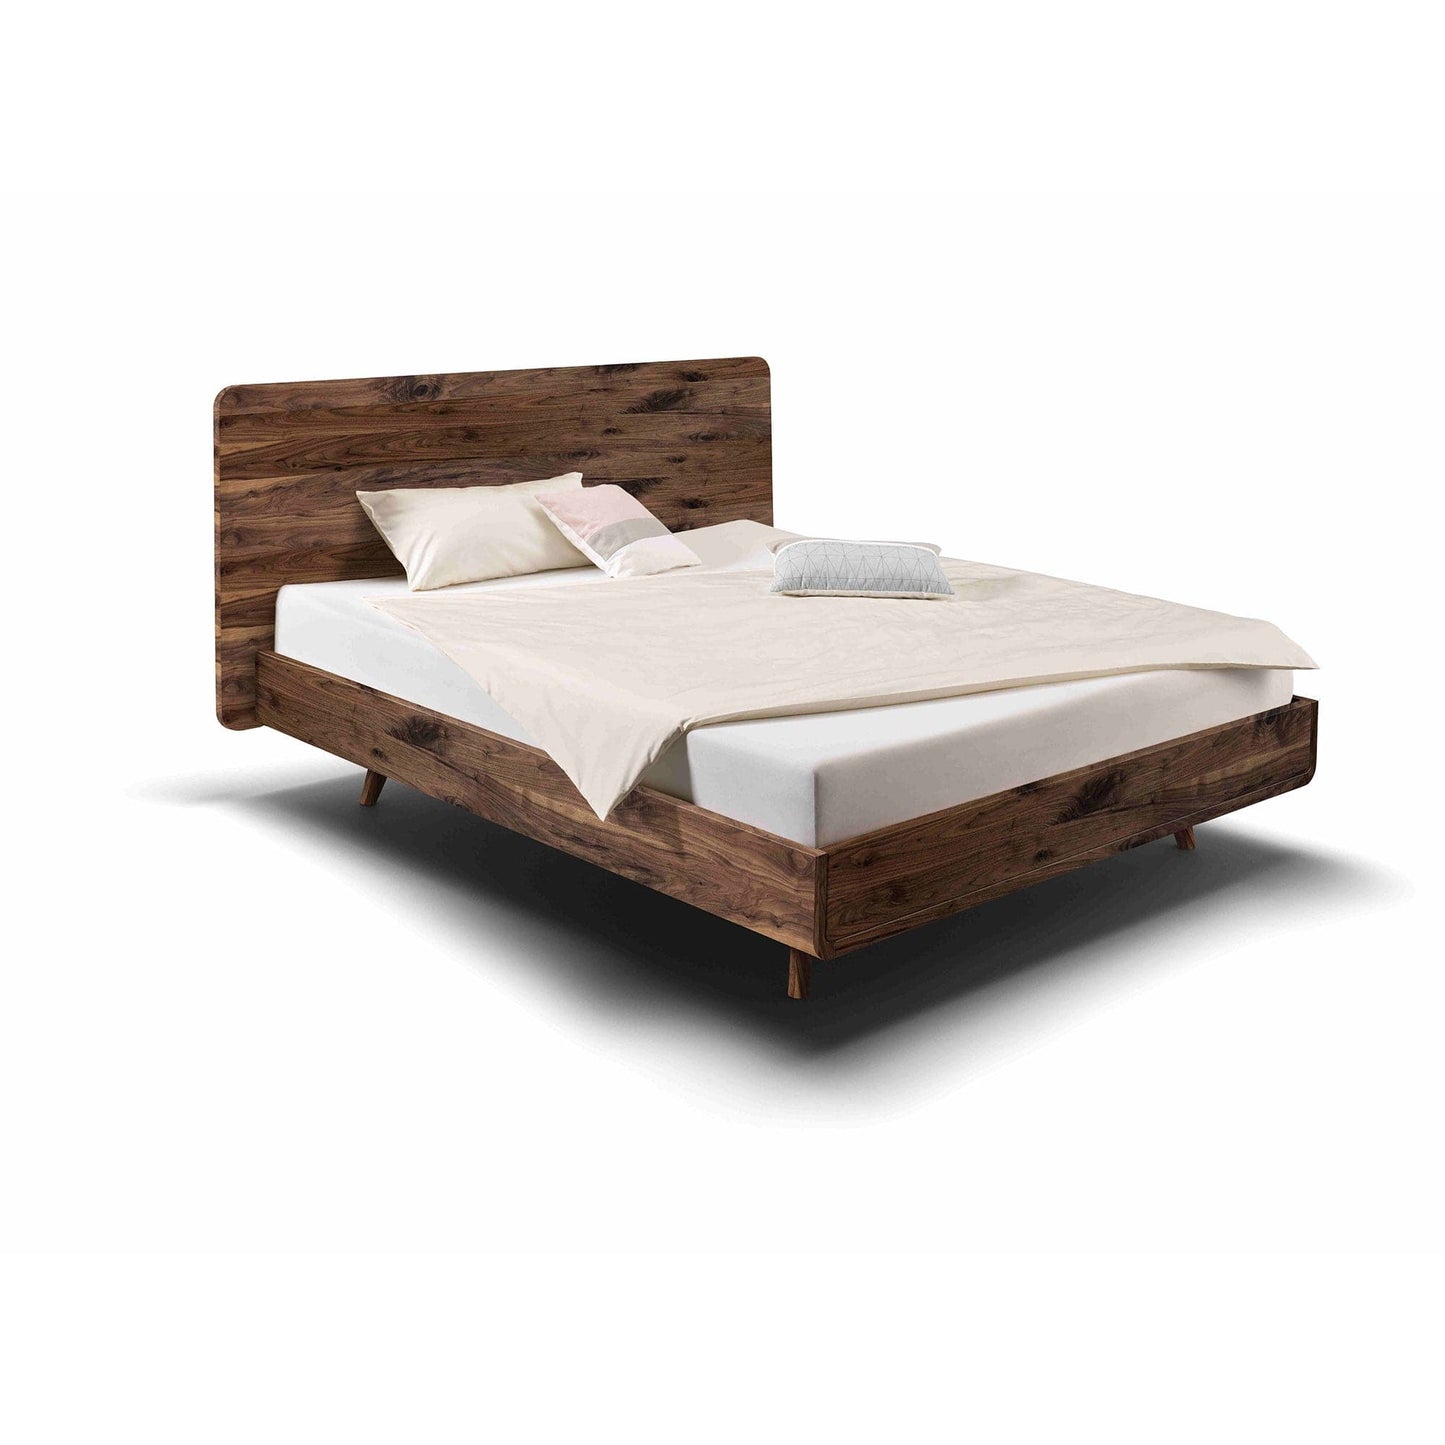 Holzmanufaktur Bett TALOS Massivholzbett mit Holzkopfteil